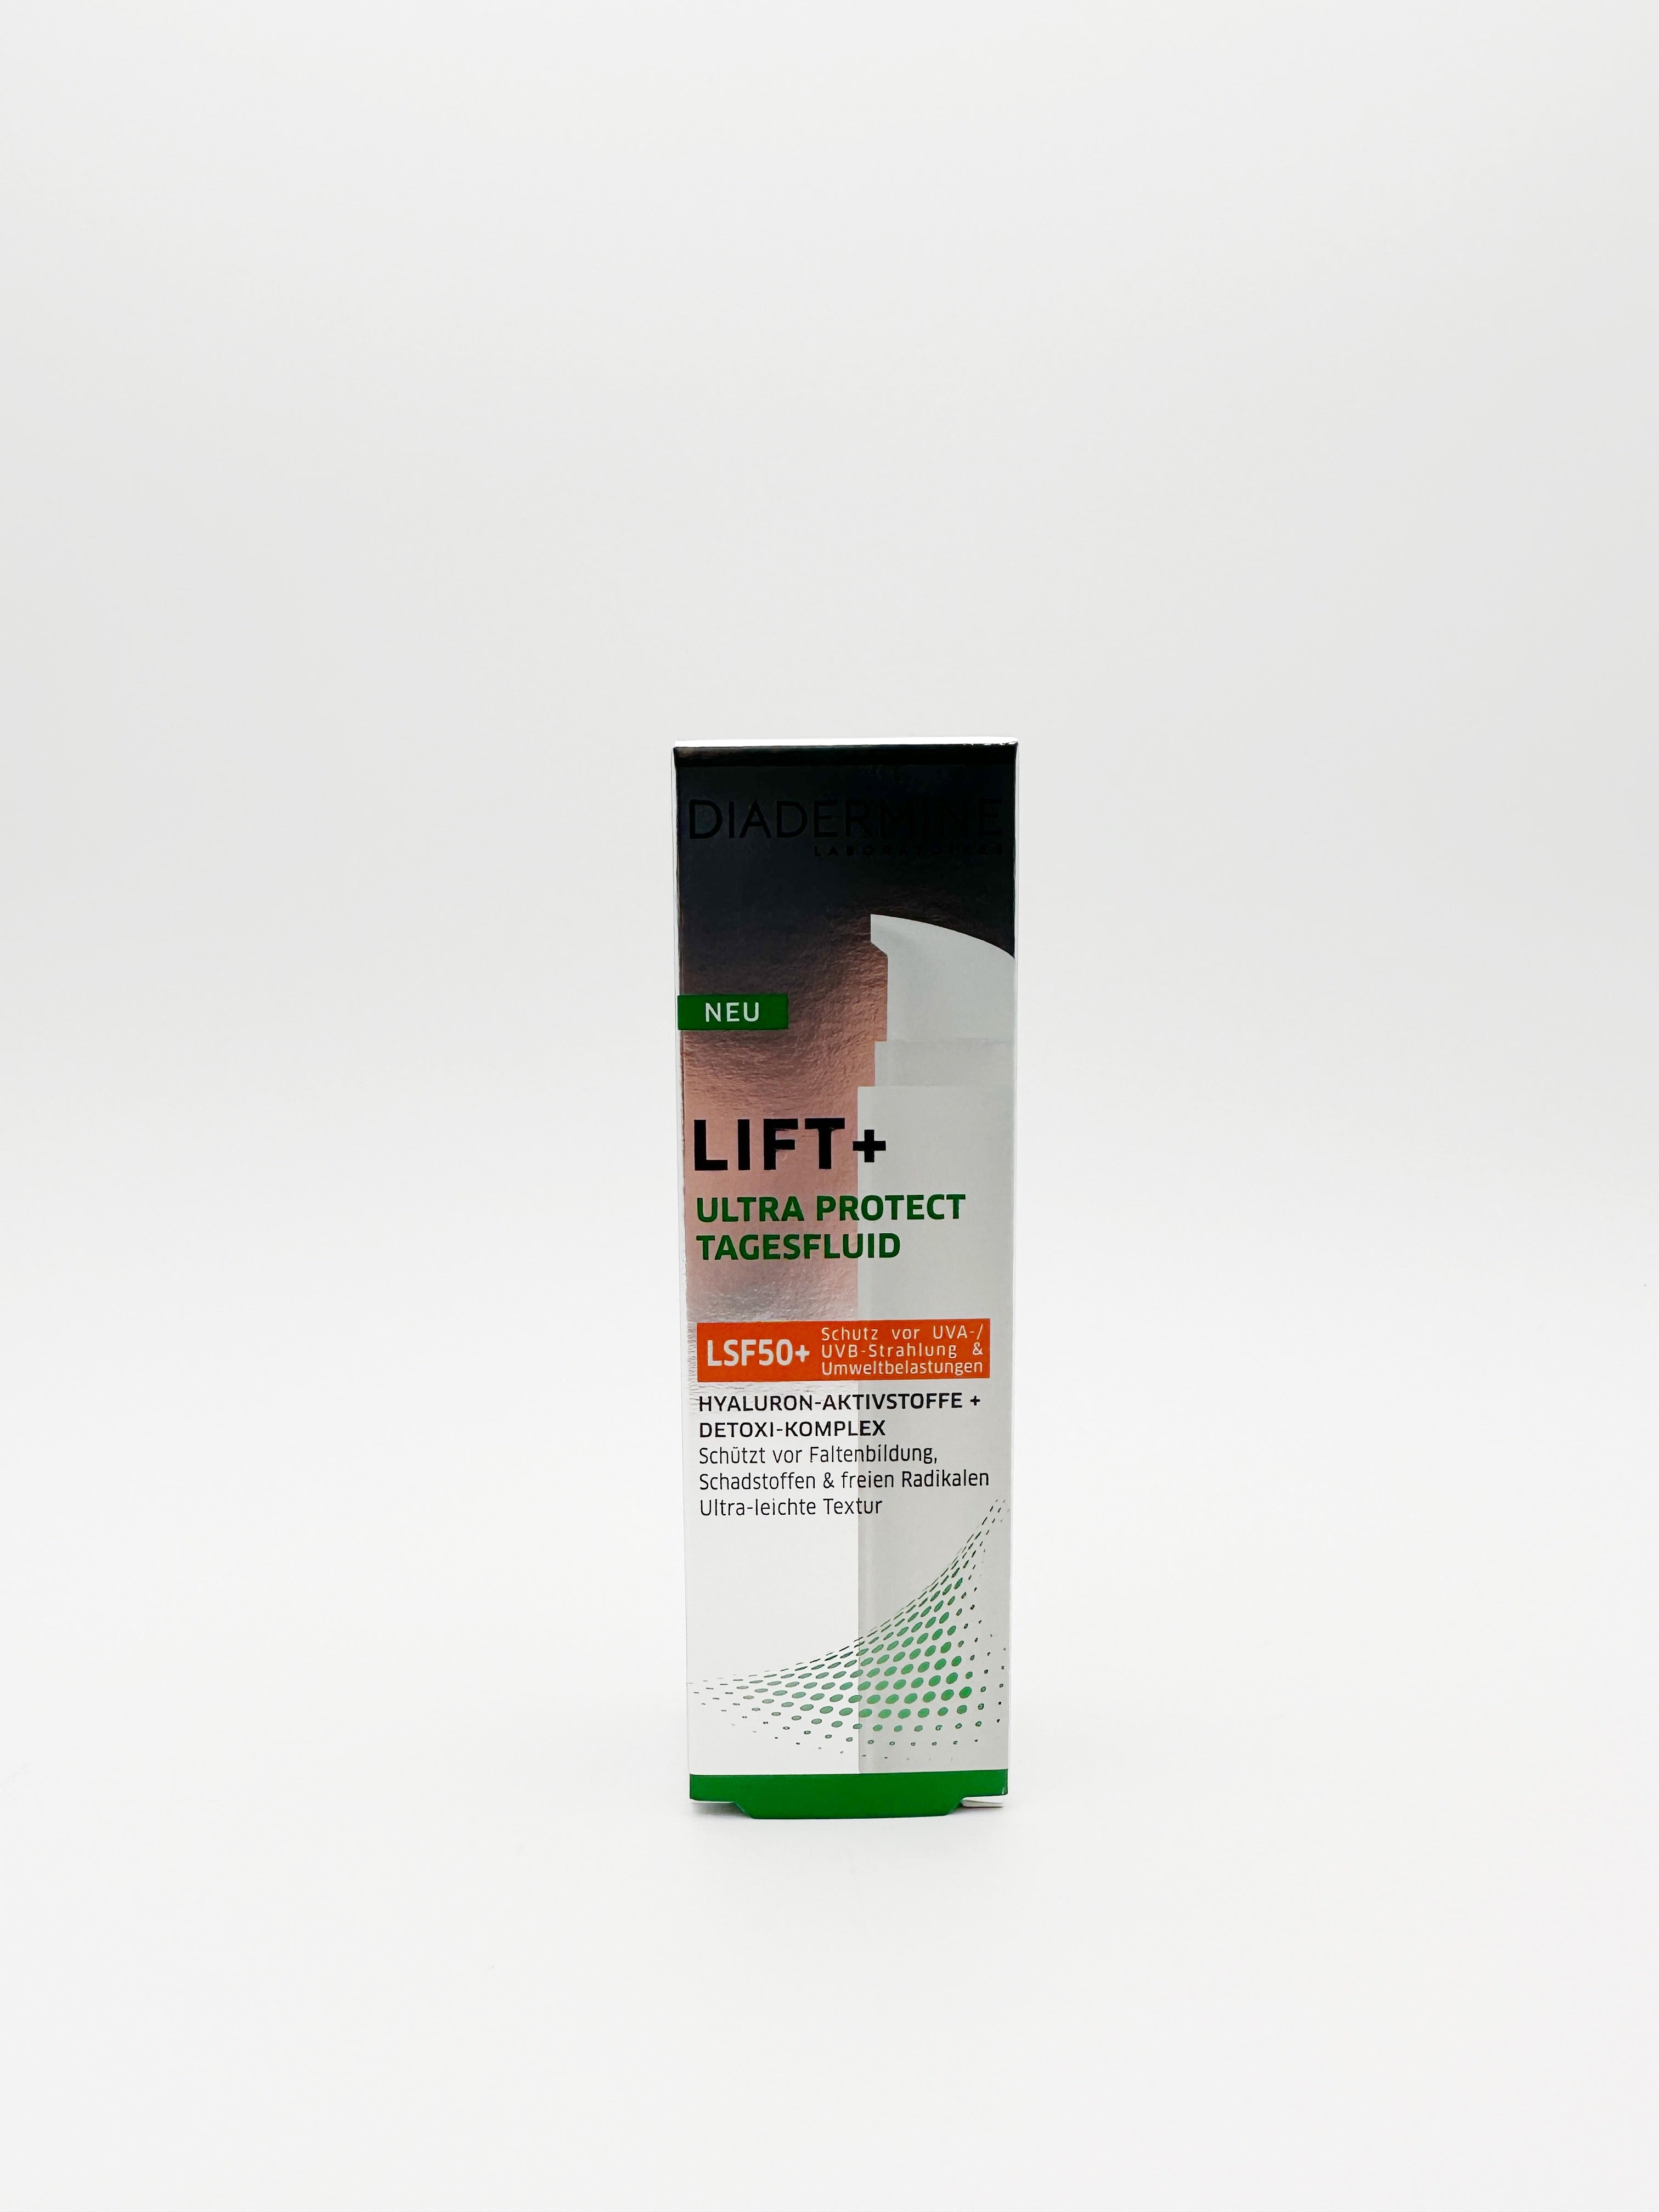 Diadermine Lift+ Tagesfluid UltraProtect 40ml